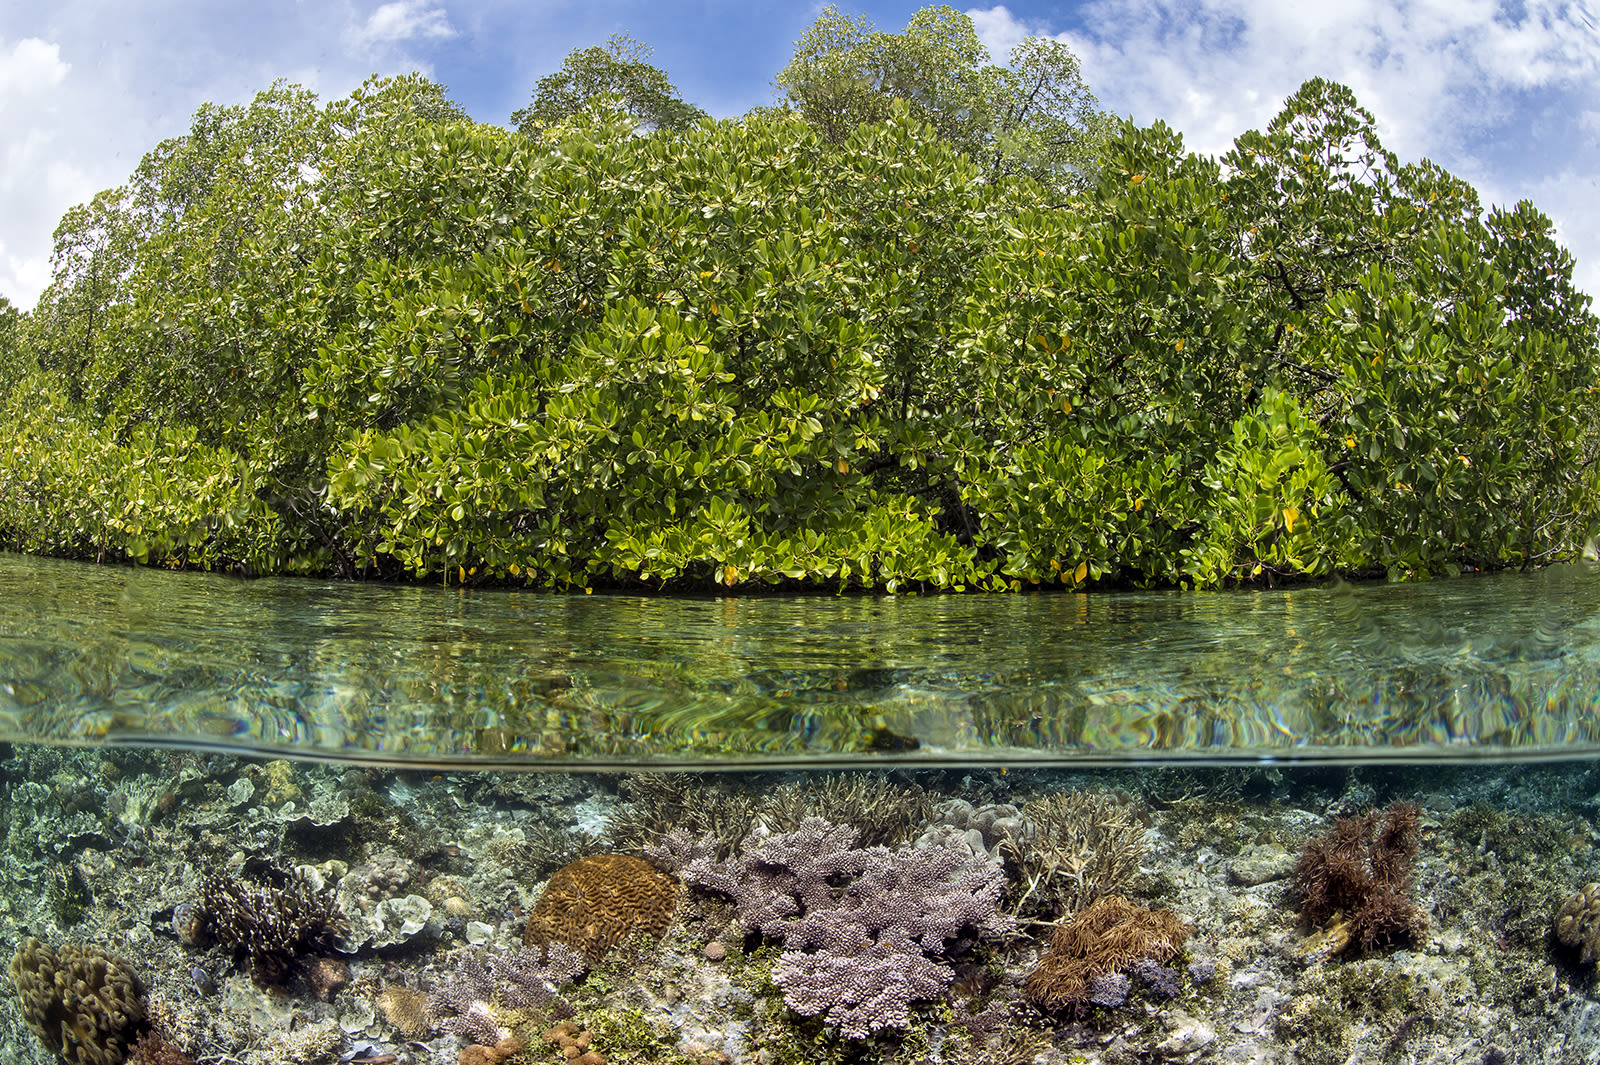 Alex Mustard | Coral Reef Image Bank